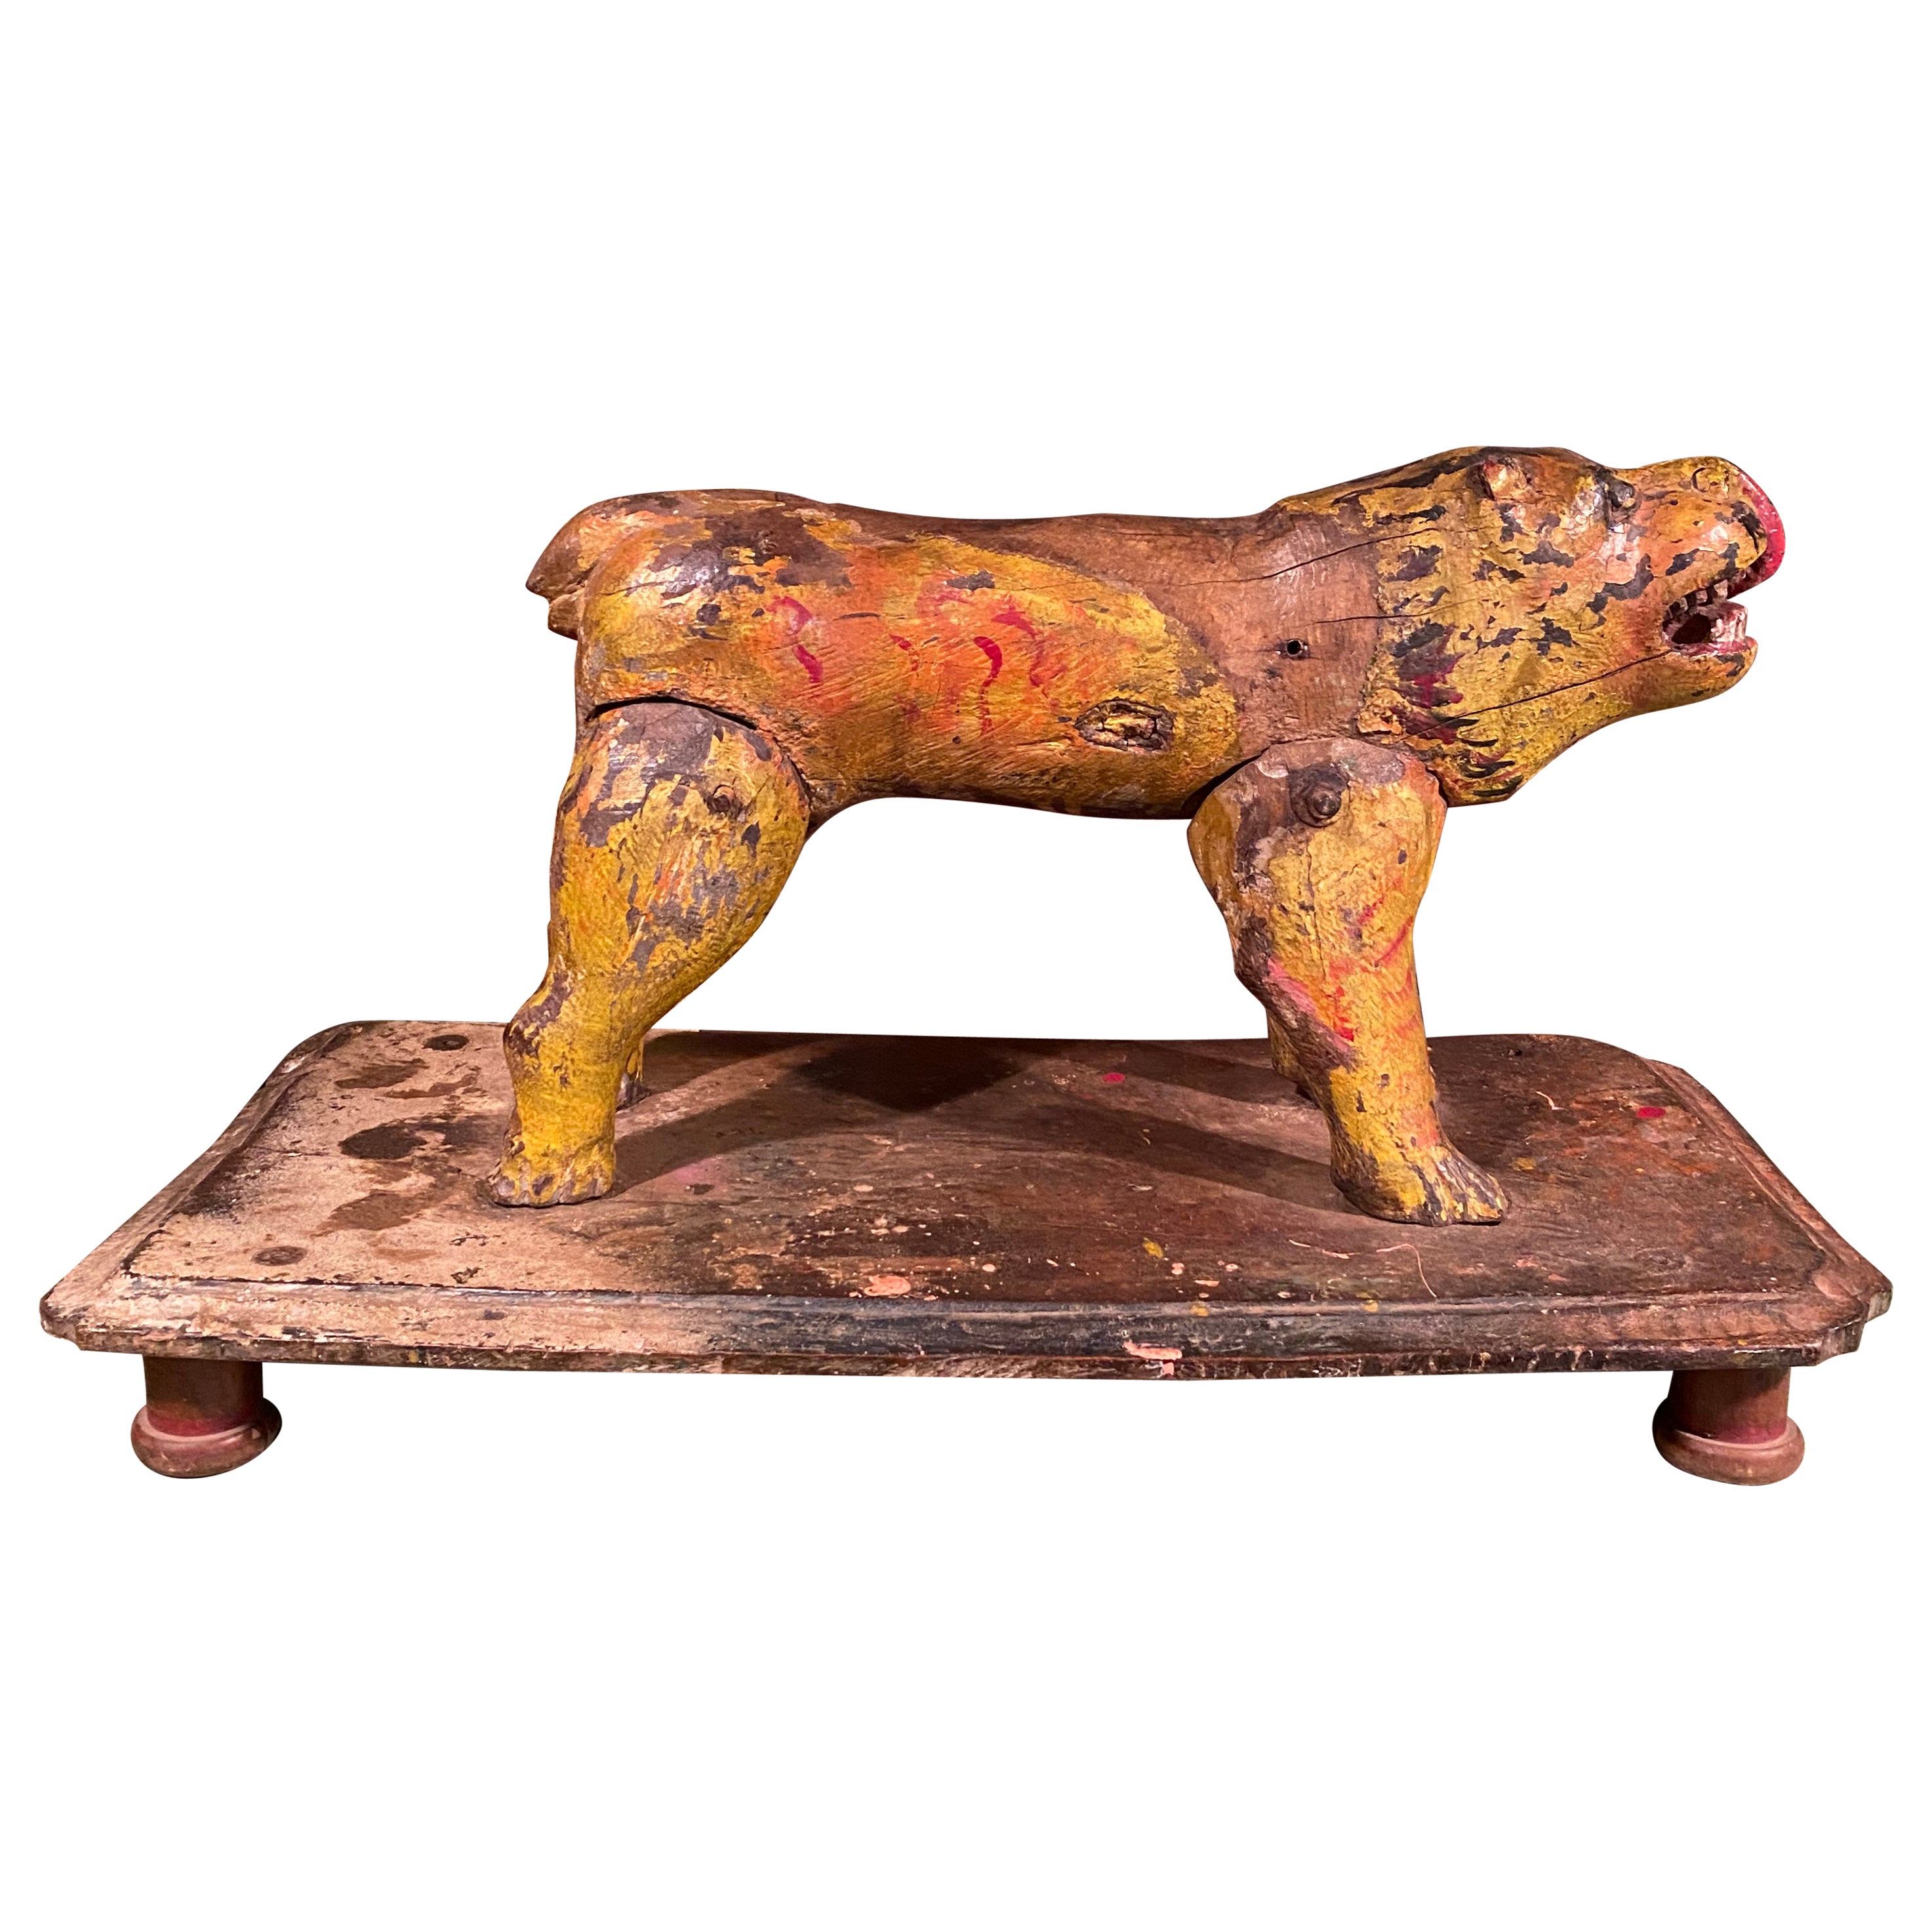 Indian Folk art sculpture of a roaring lion For Sale